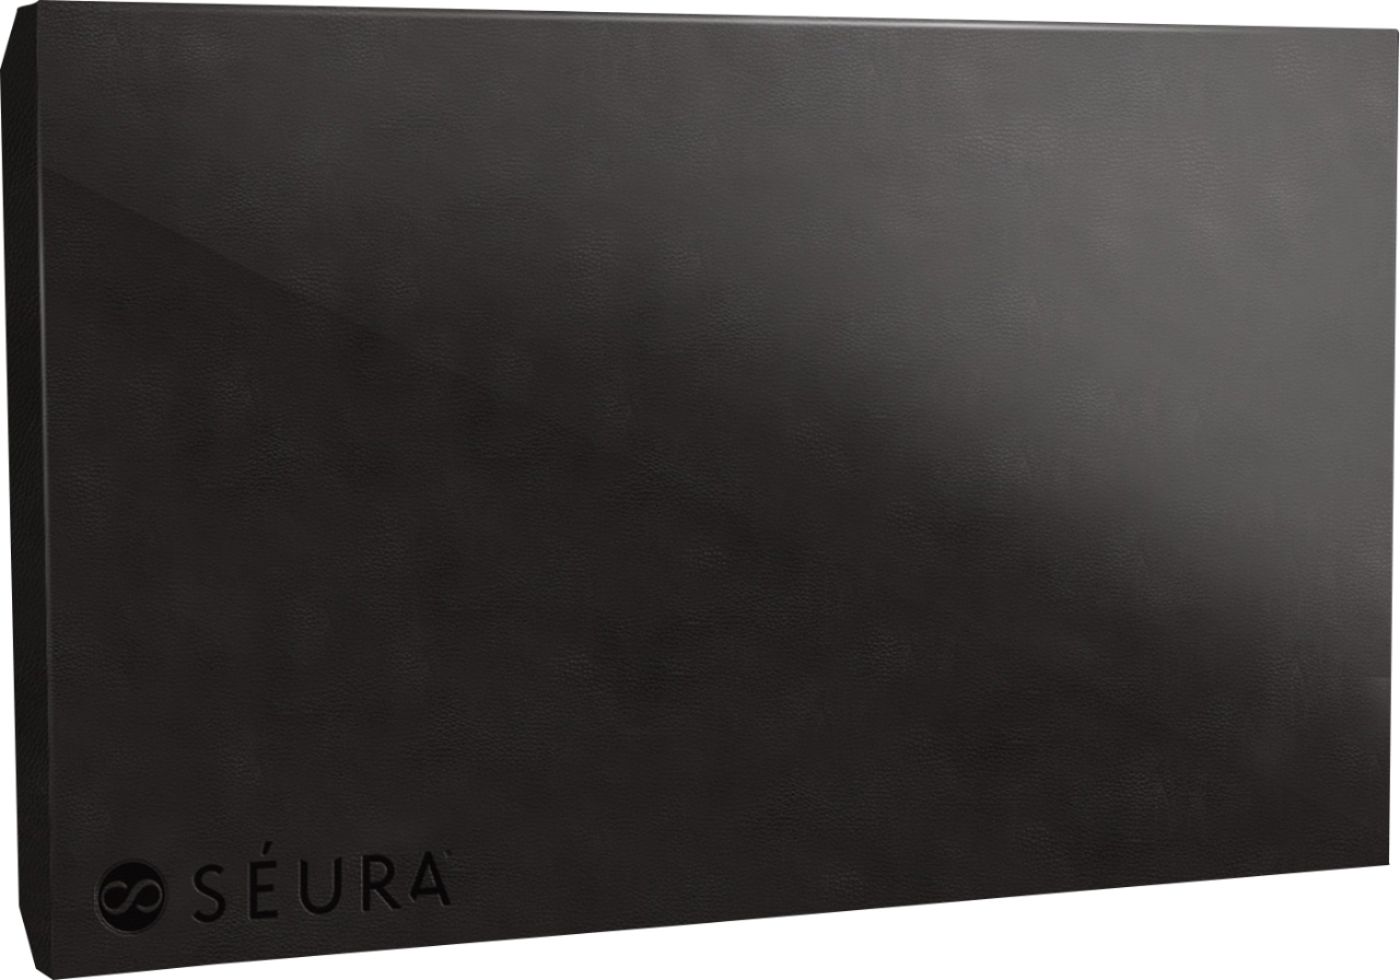 Angle View: Seura - TV Cover for 86" Séura Ultra Bright TV with Speaker Bar - Black